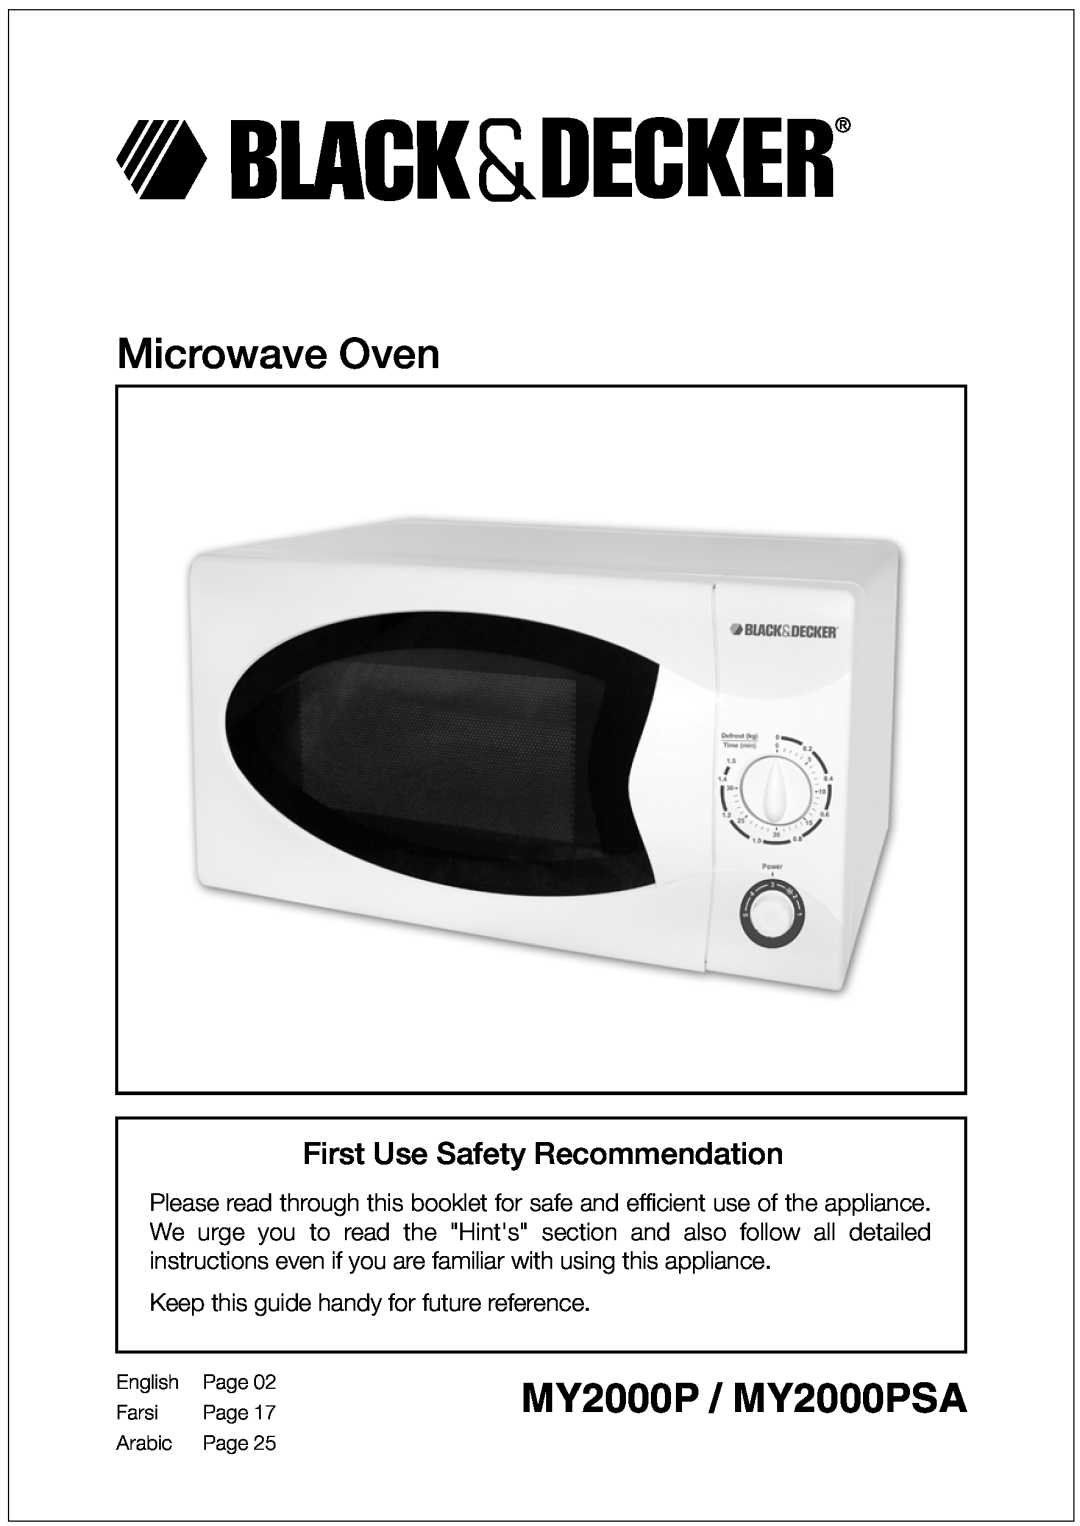 Black & Decker manual Microwave Oven, MY2000P / MY2000PSA 